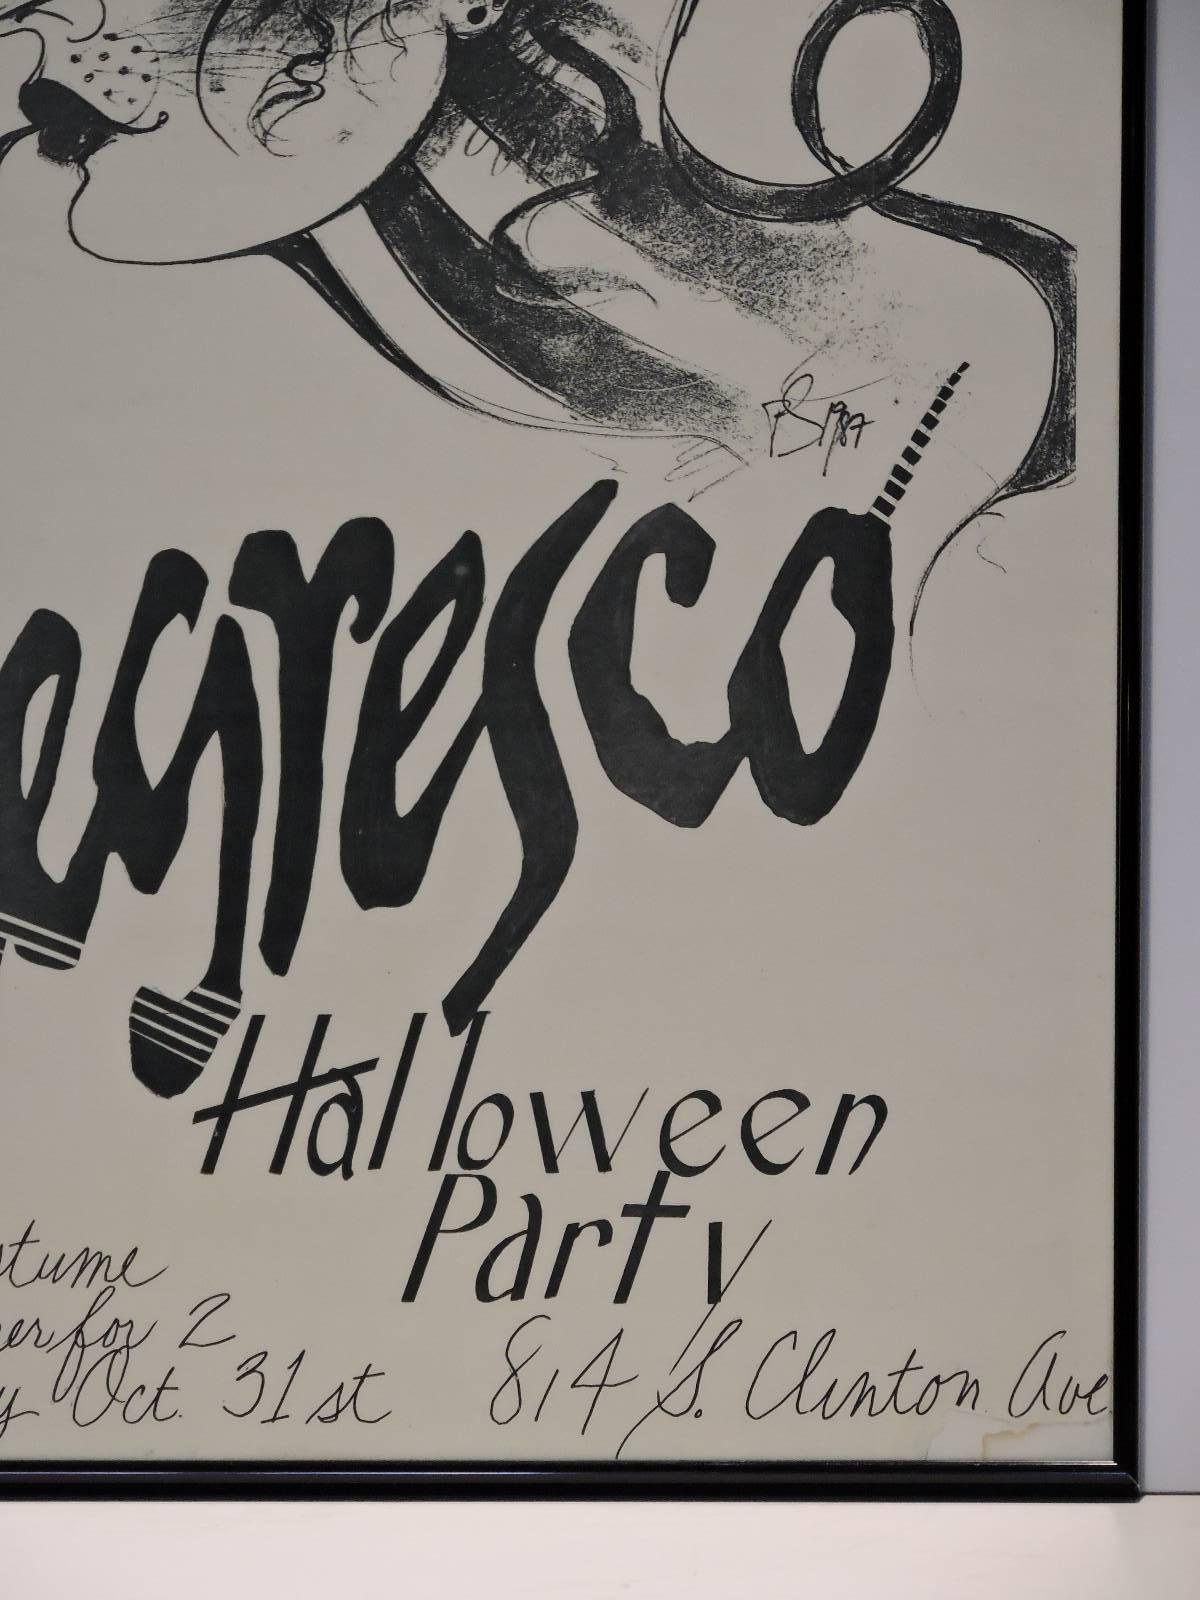 Negresco Halloween Party Poster by Ramon Santiago, 1987 1